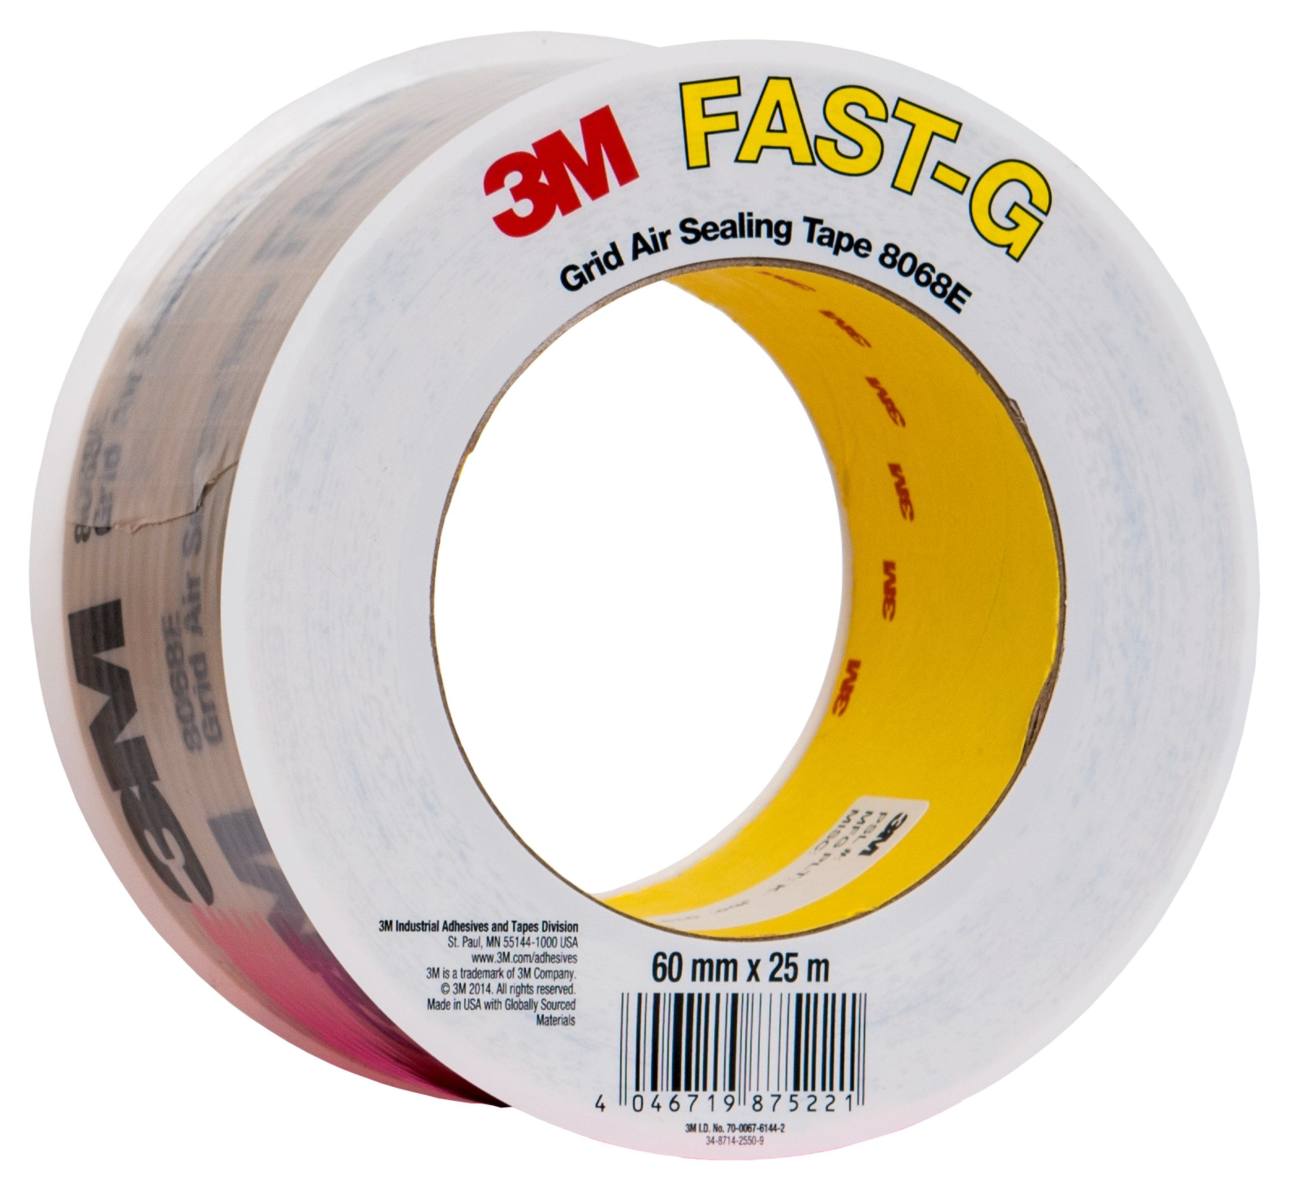 3M FAST-G 8068E Flexible Air Sealing Tape, No Liner, 50mm x 25m, 1.3mm